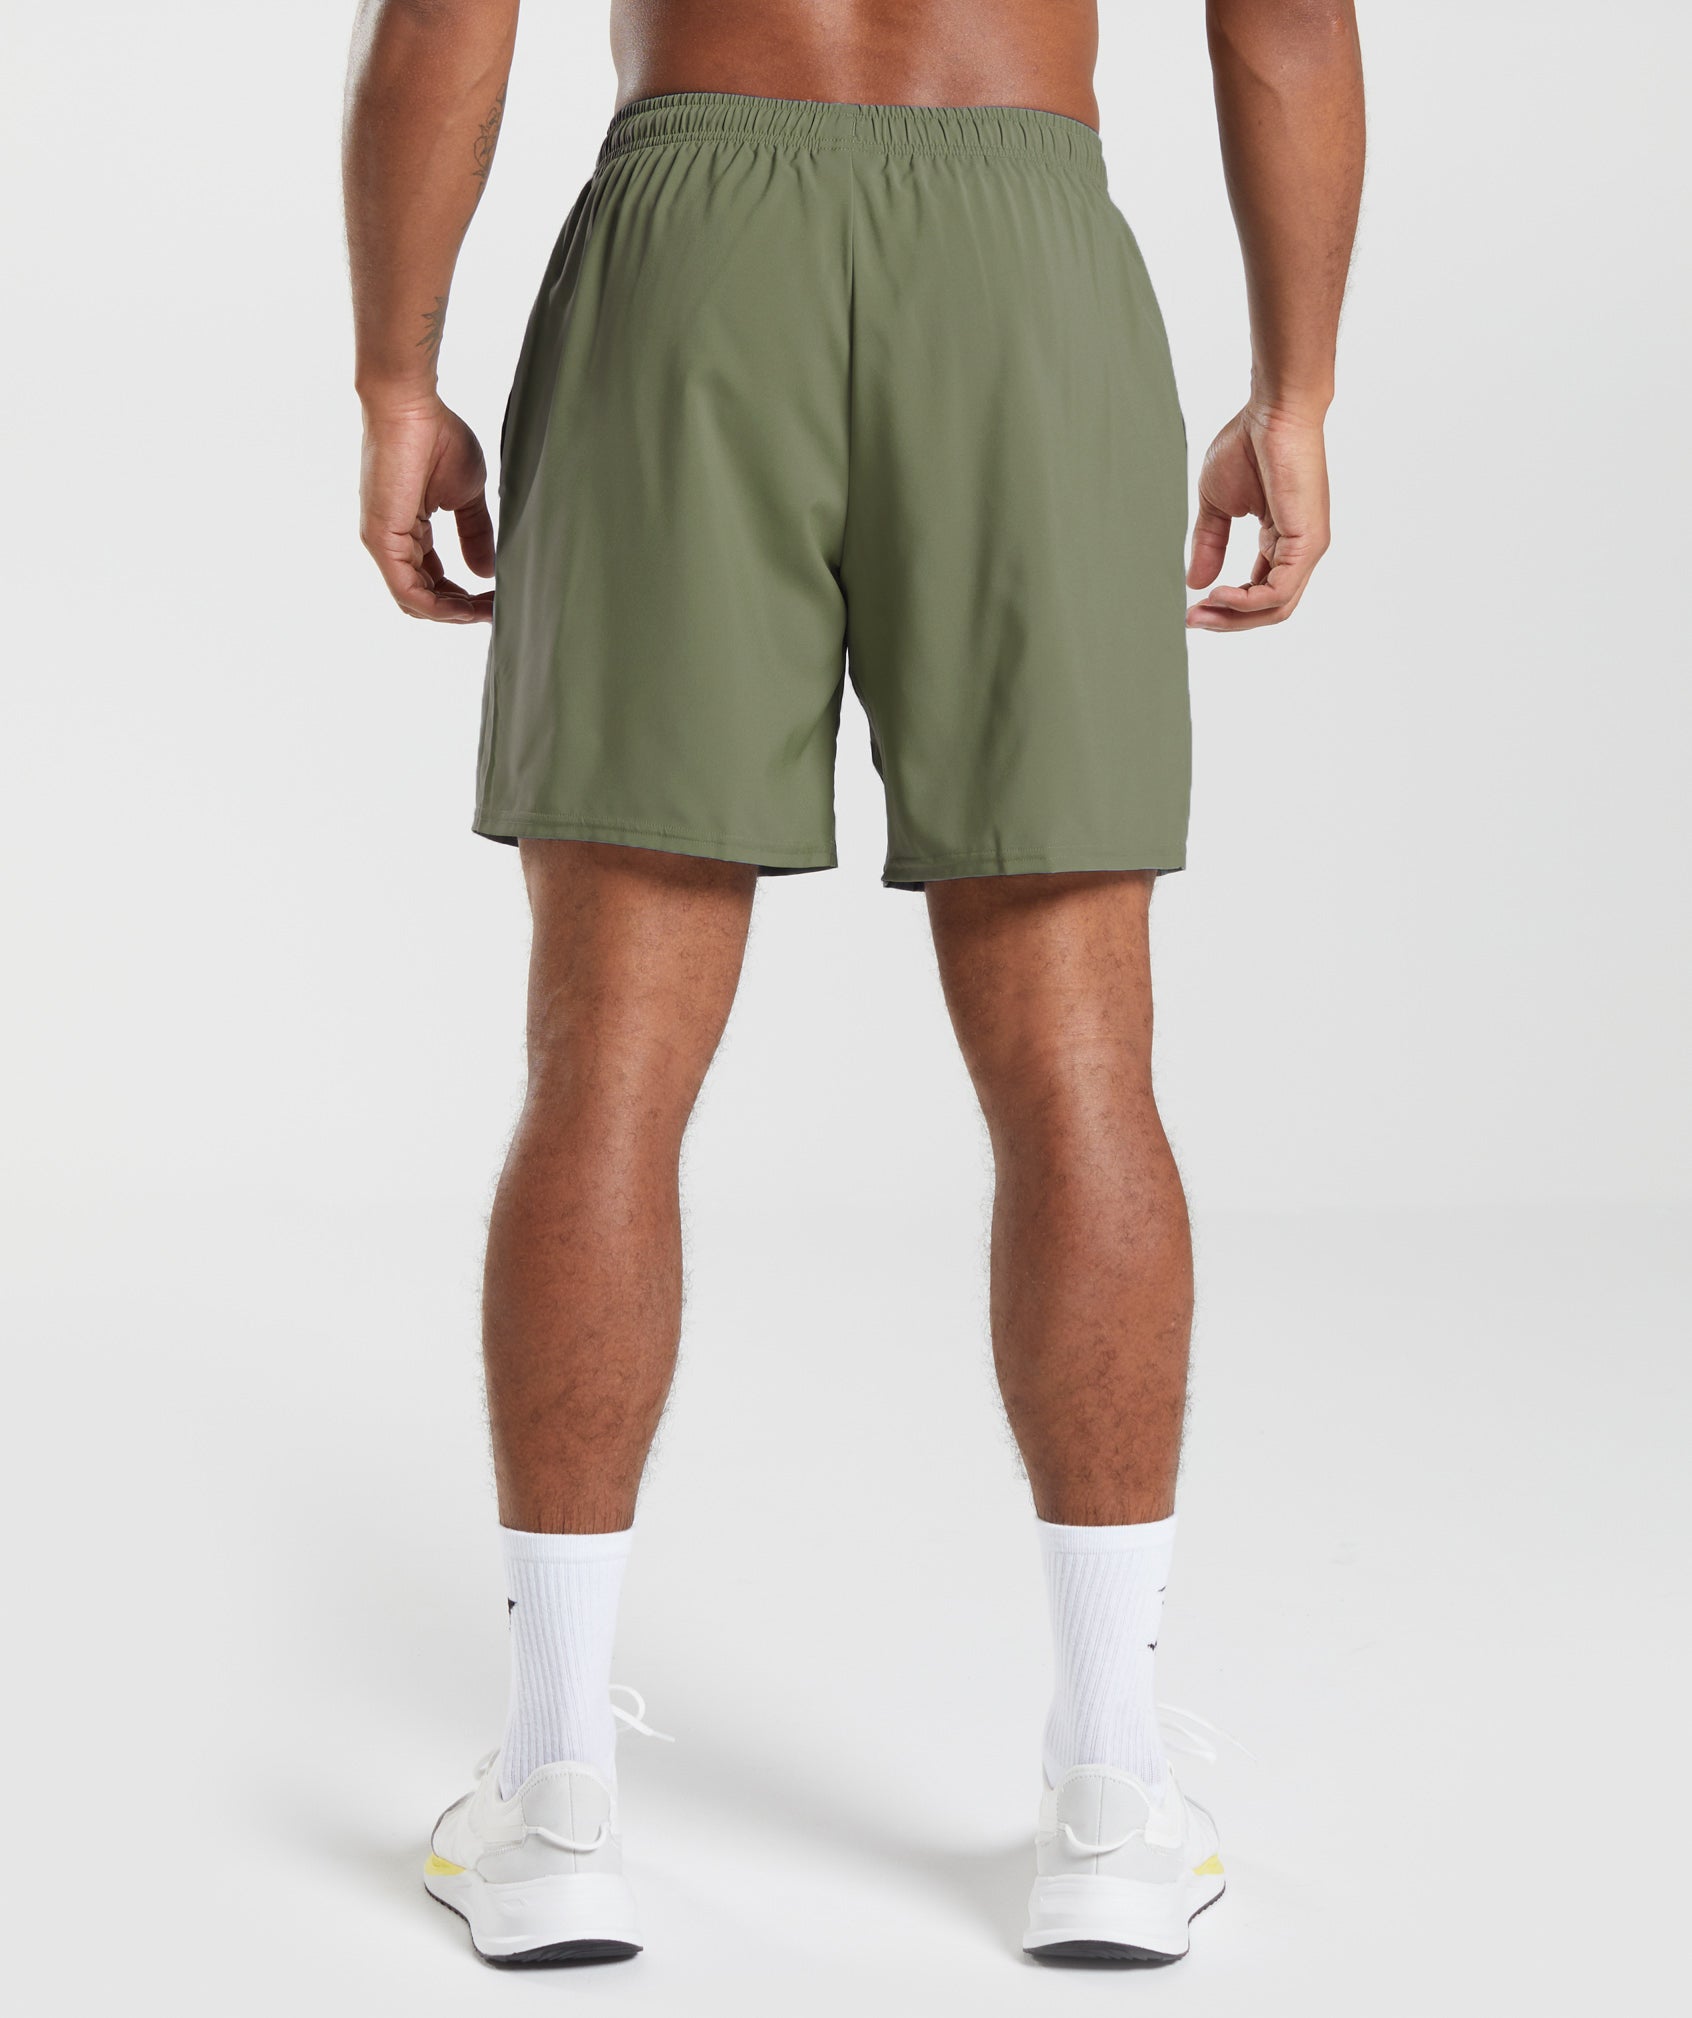 Gymshark Crest Shorts - Navy